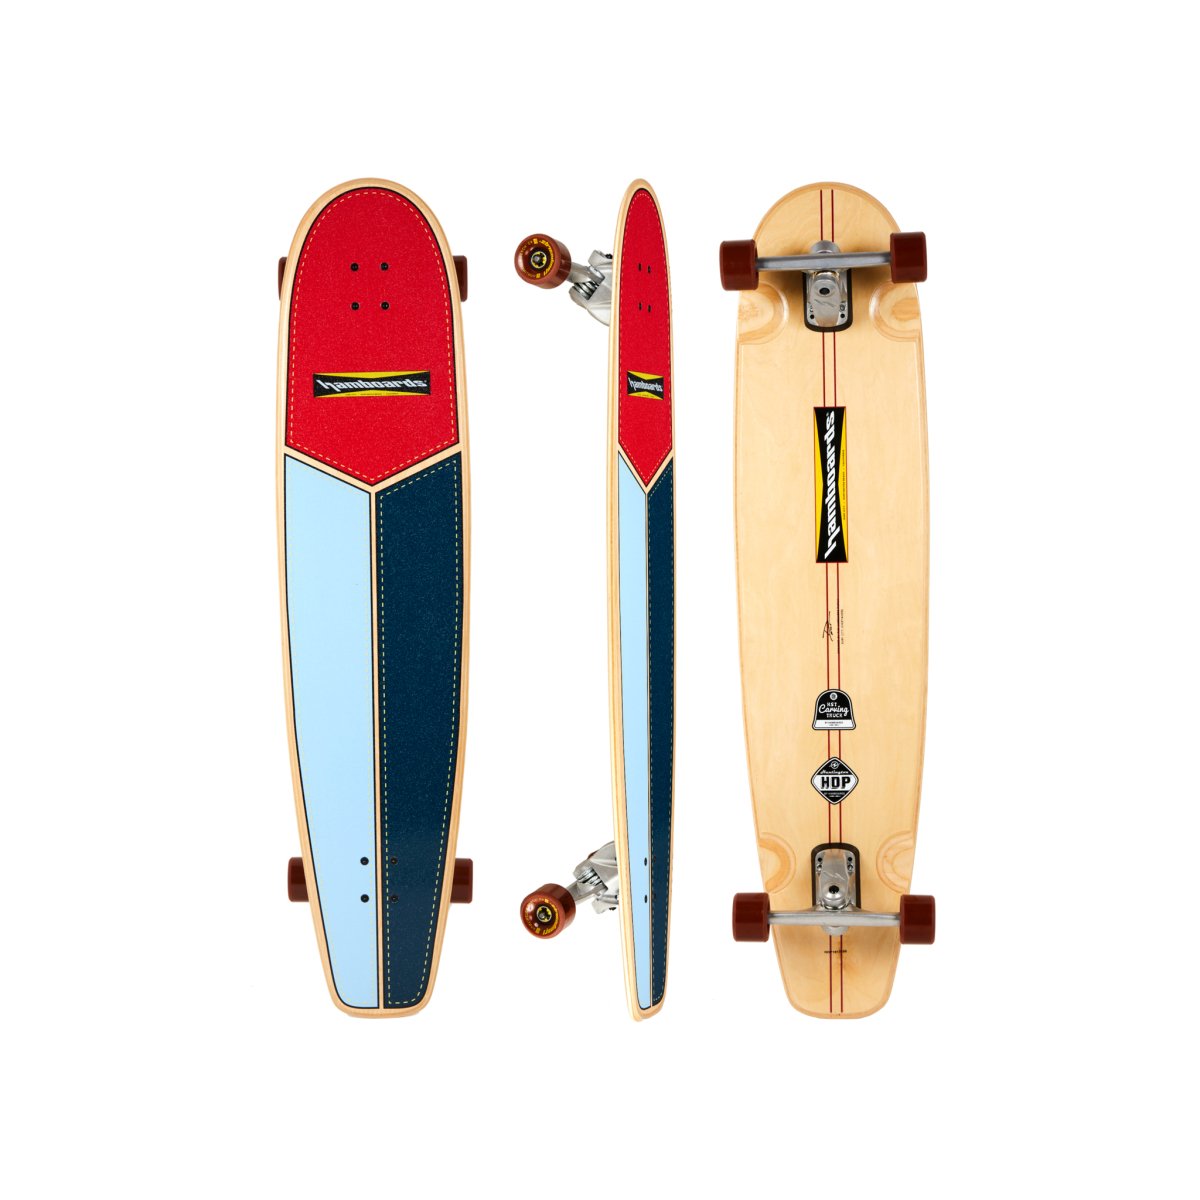 Hamboard 45" HHOP Carving Surfskates - Light Blue Red Navy - Surfskate - Completes